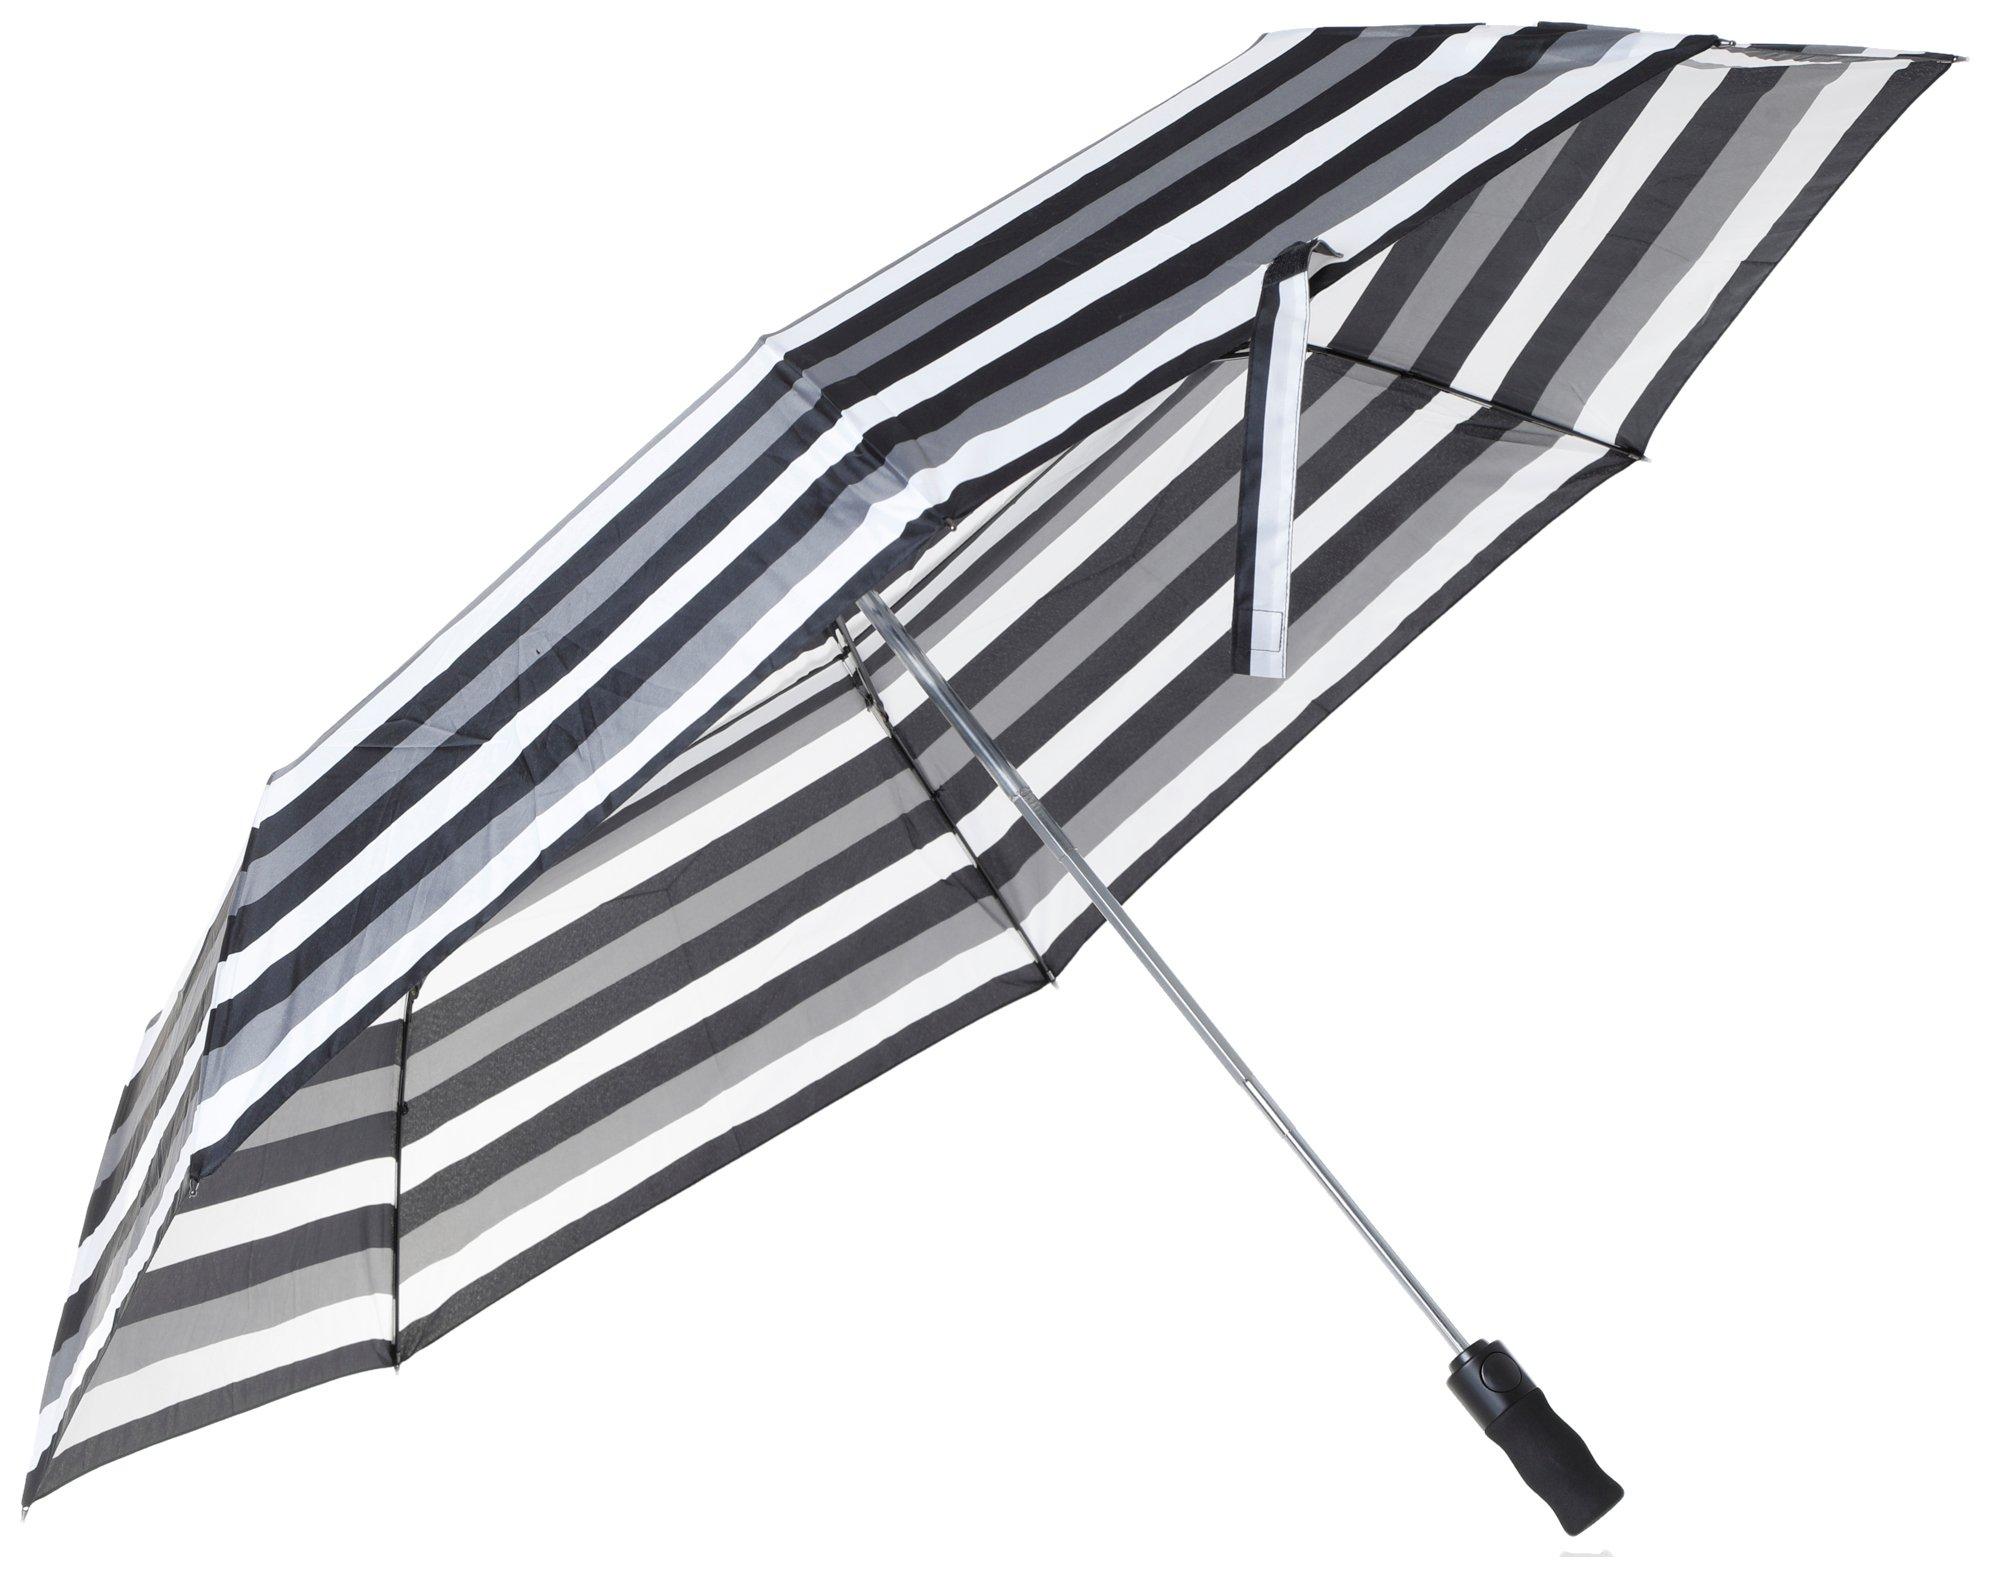 ShedRain 54 In. Windjammer Auto Open Print Umbrella